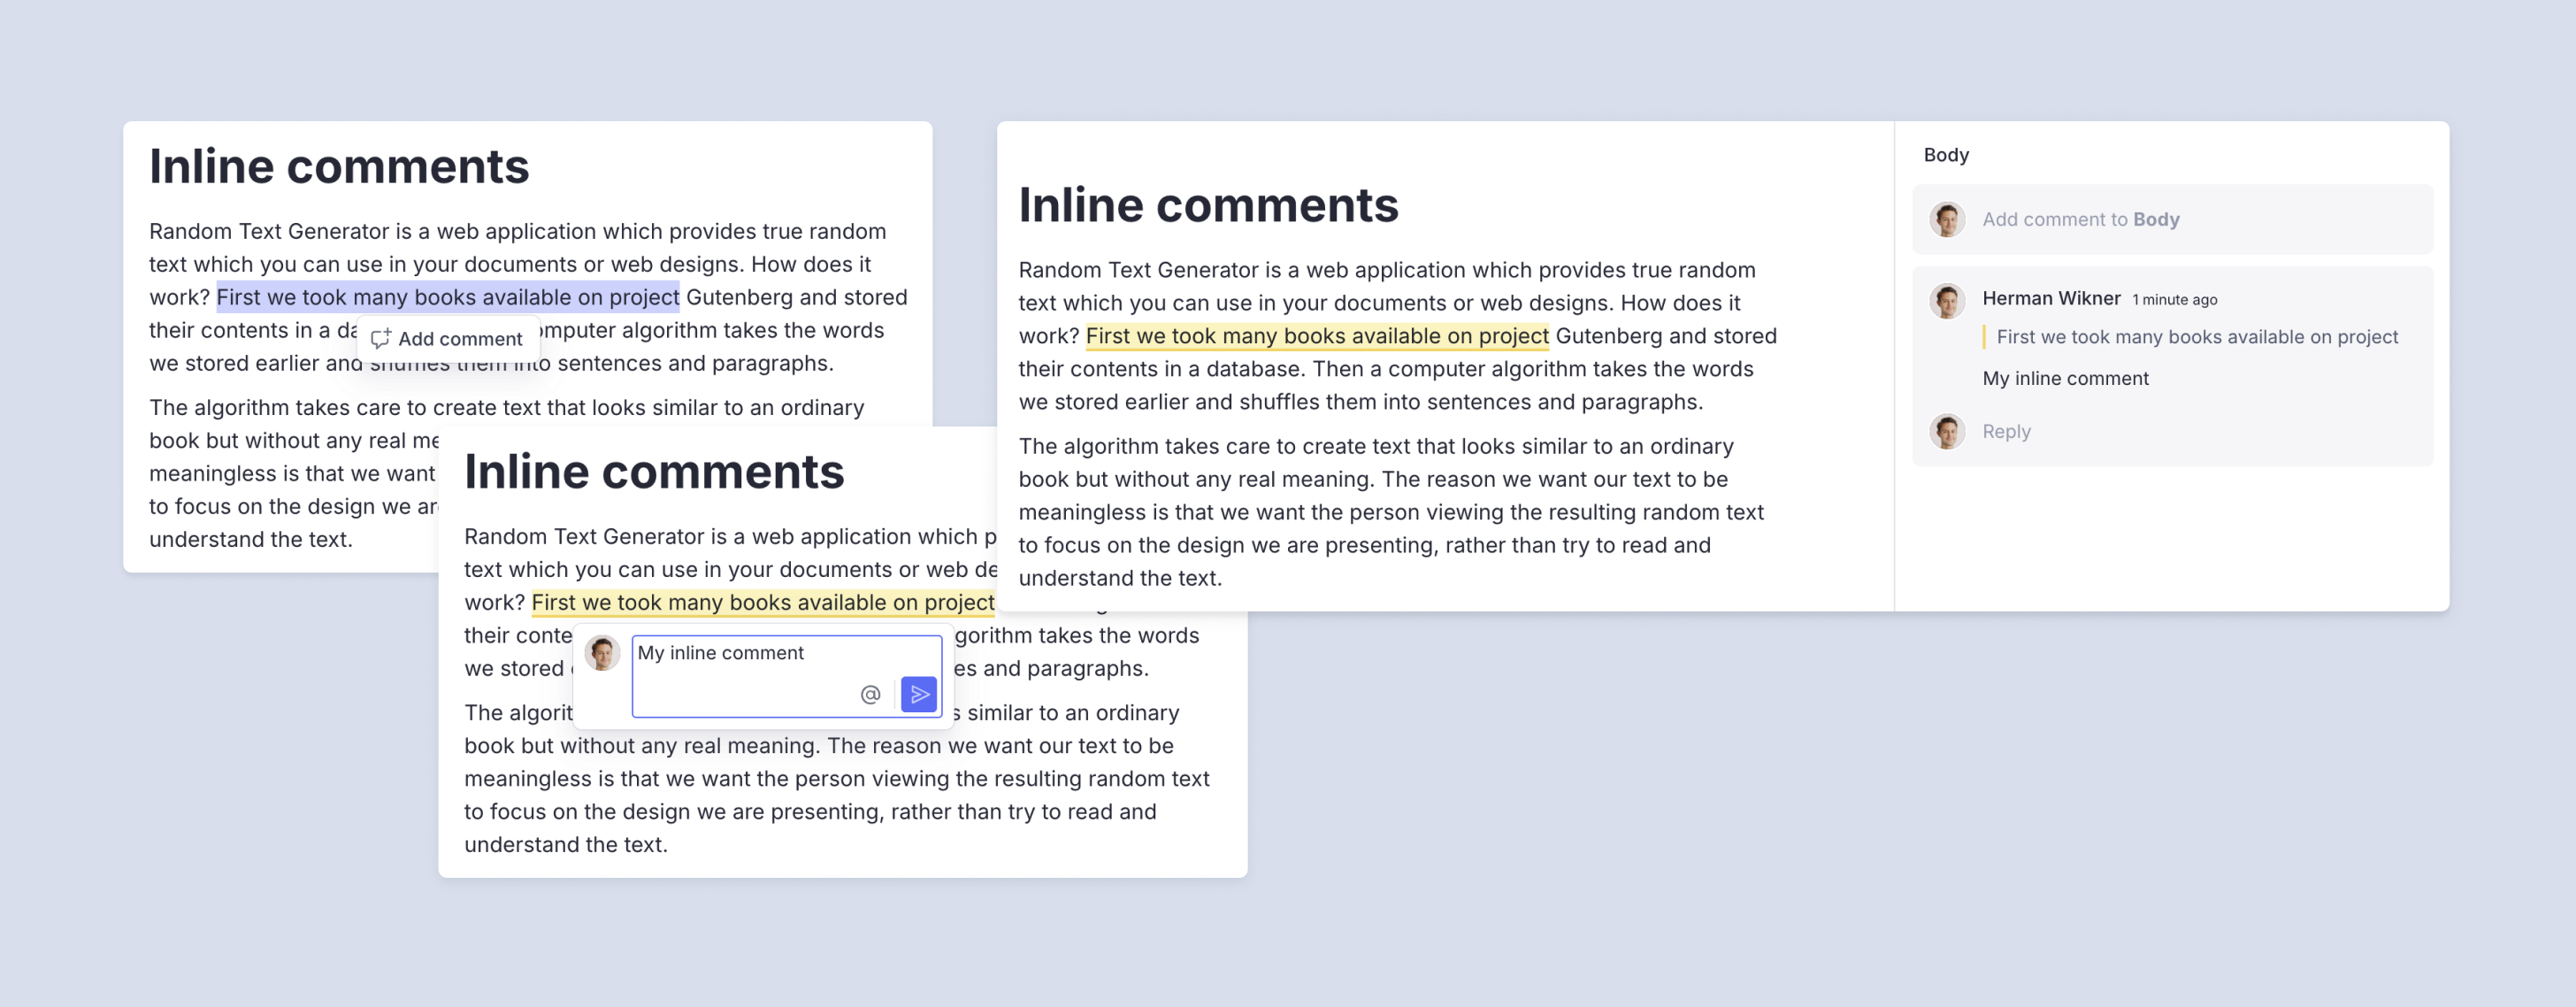 inline comments screenshot